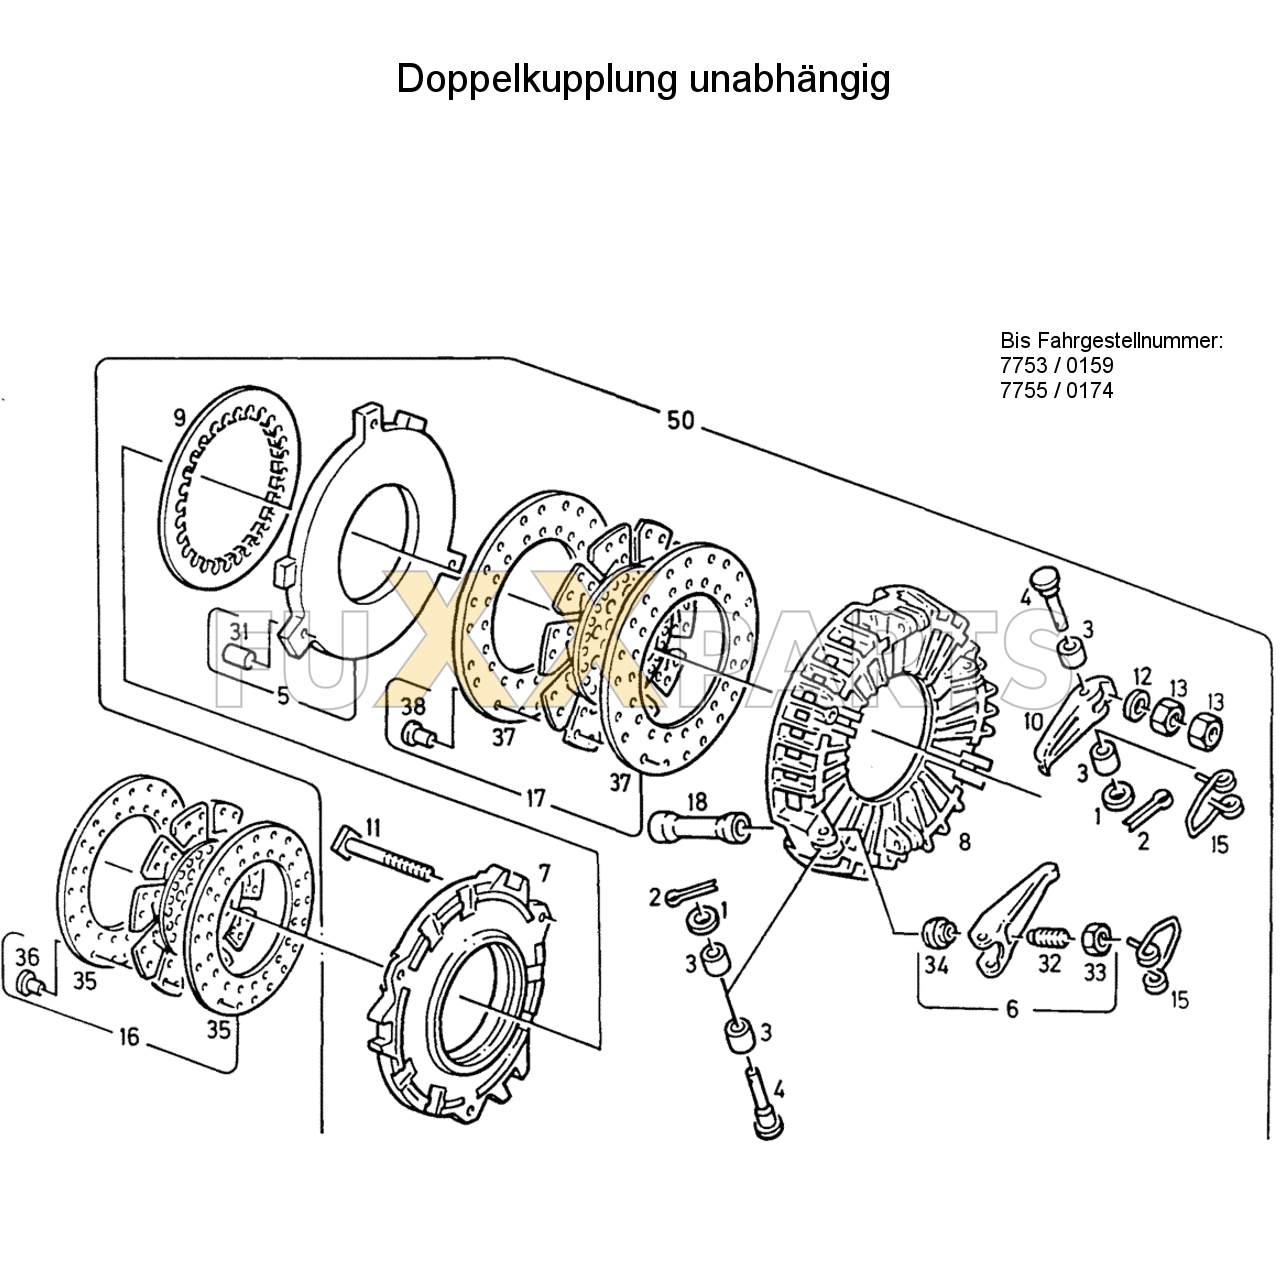 D 7207 C Doppelkupplung unabhängig 1